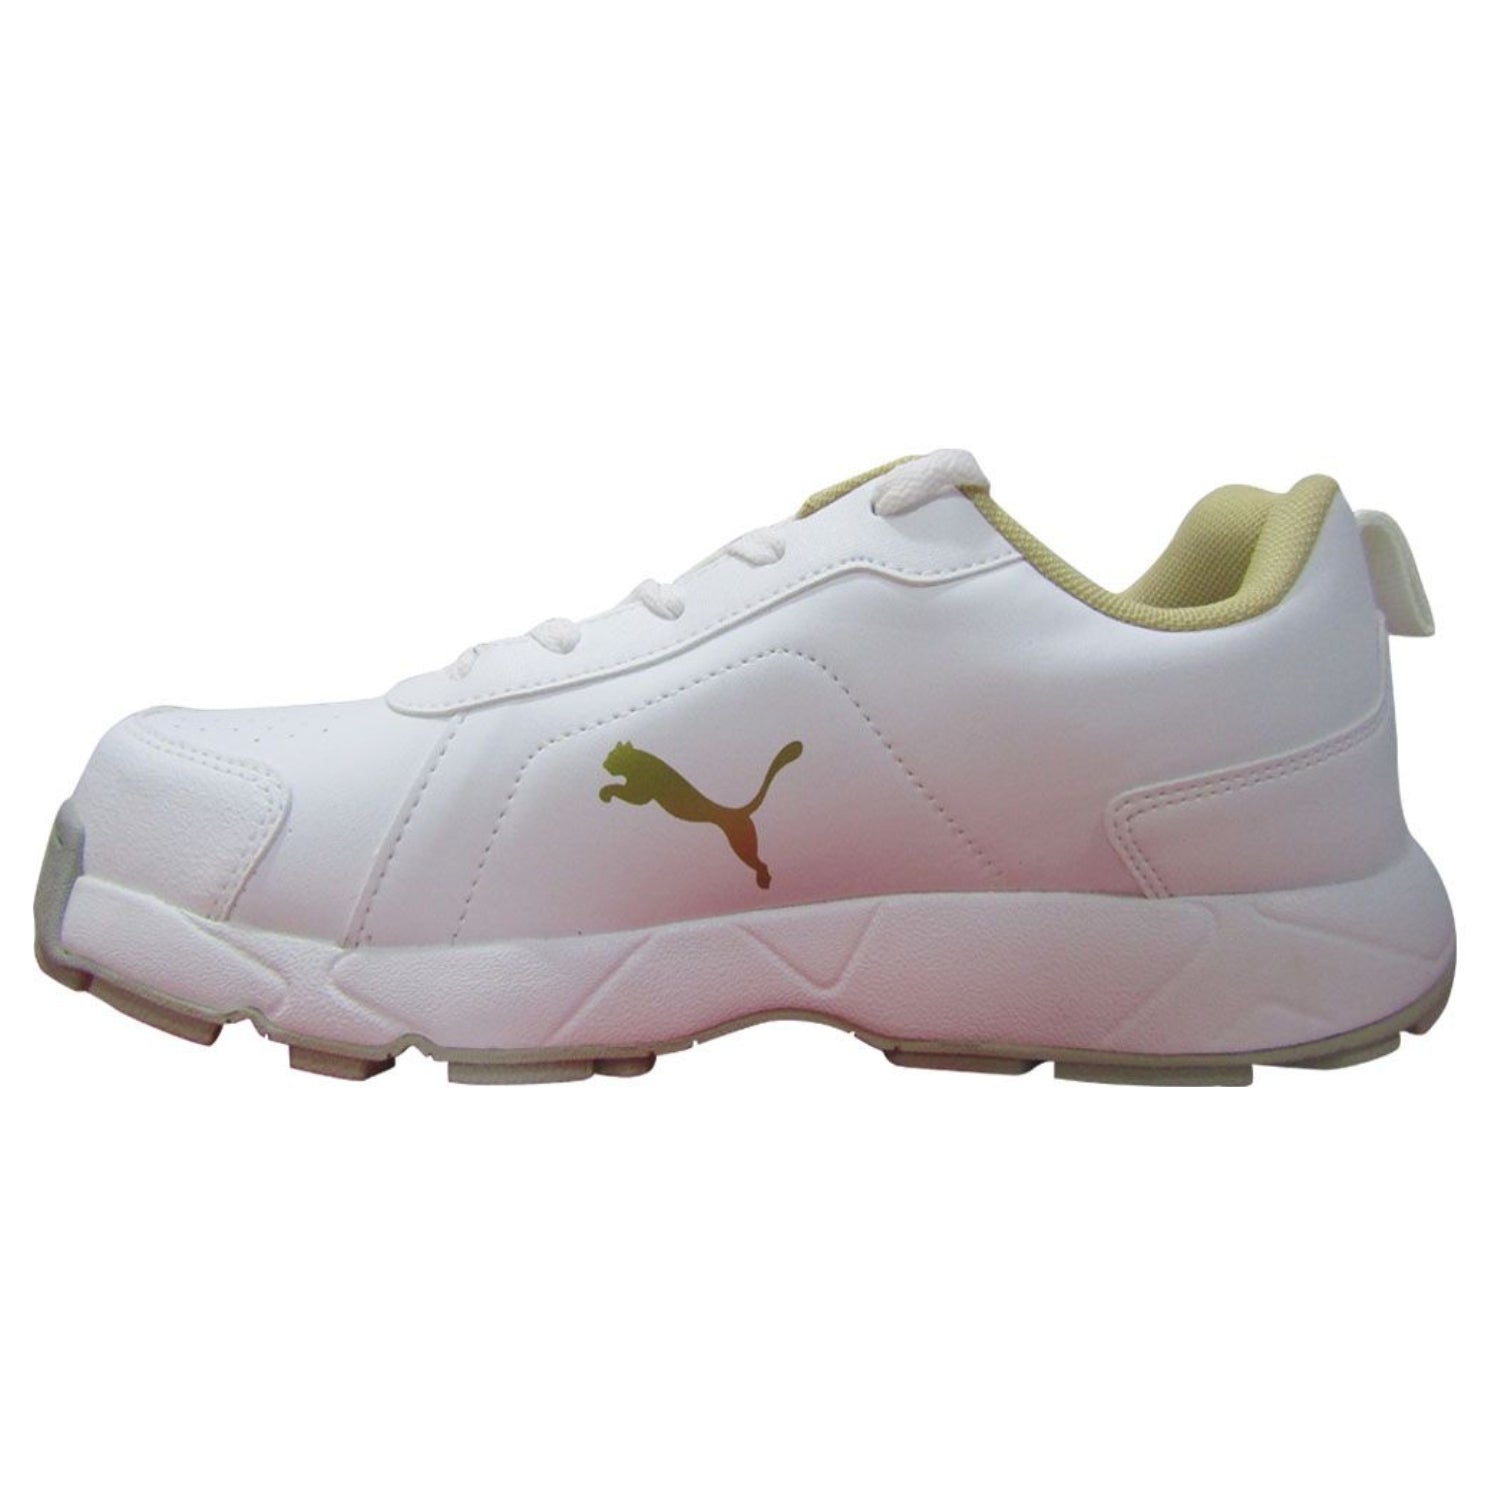 Puma Cricket Shoes, Model Classic Cat, White/Mettallic Gold